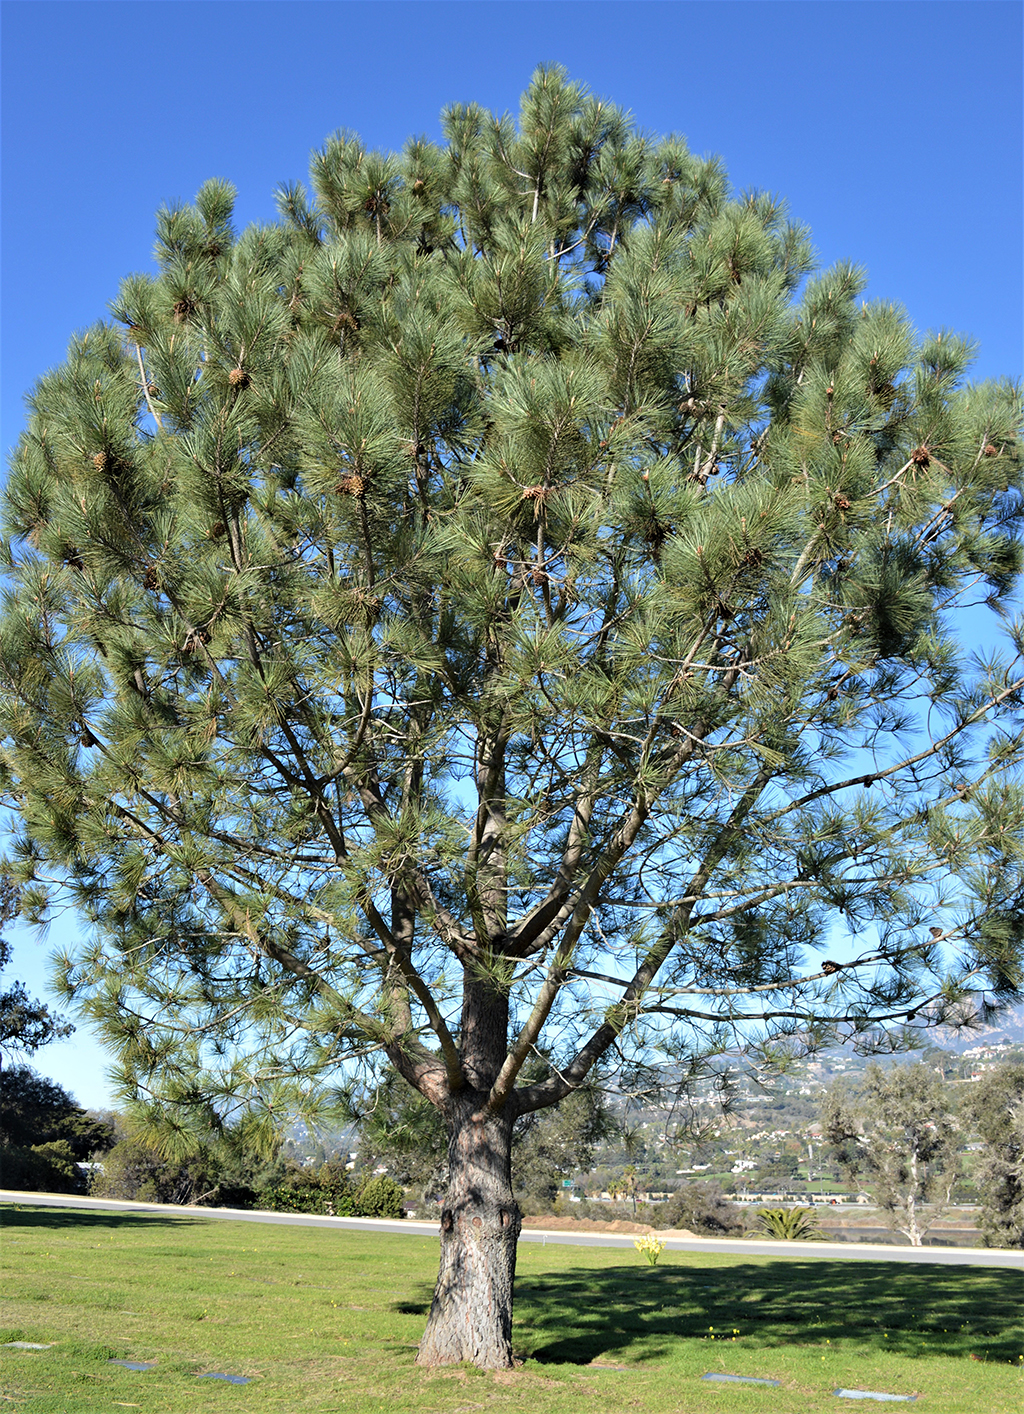 Torrey Pine photo by David Gress for Santa Barbara Beautiful